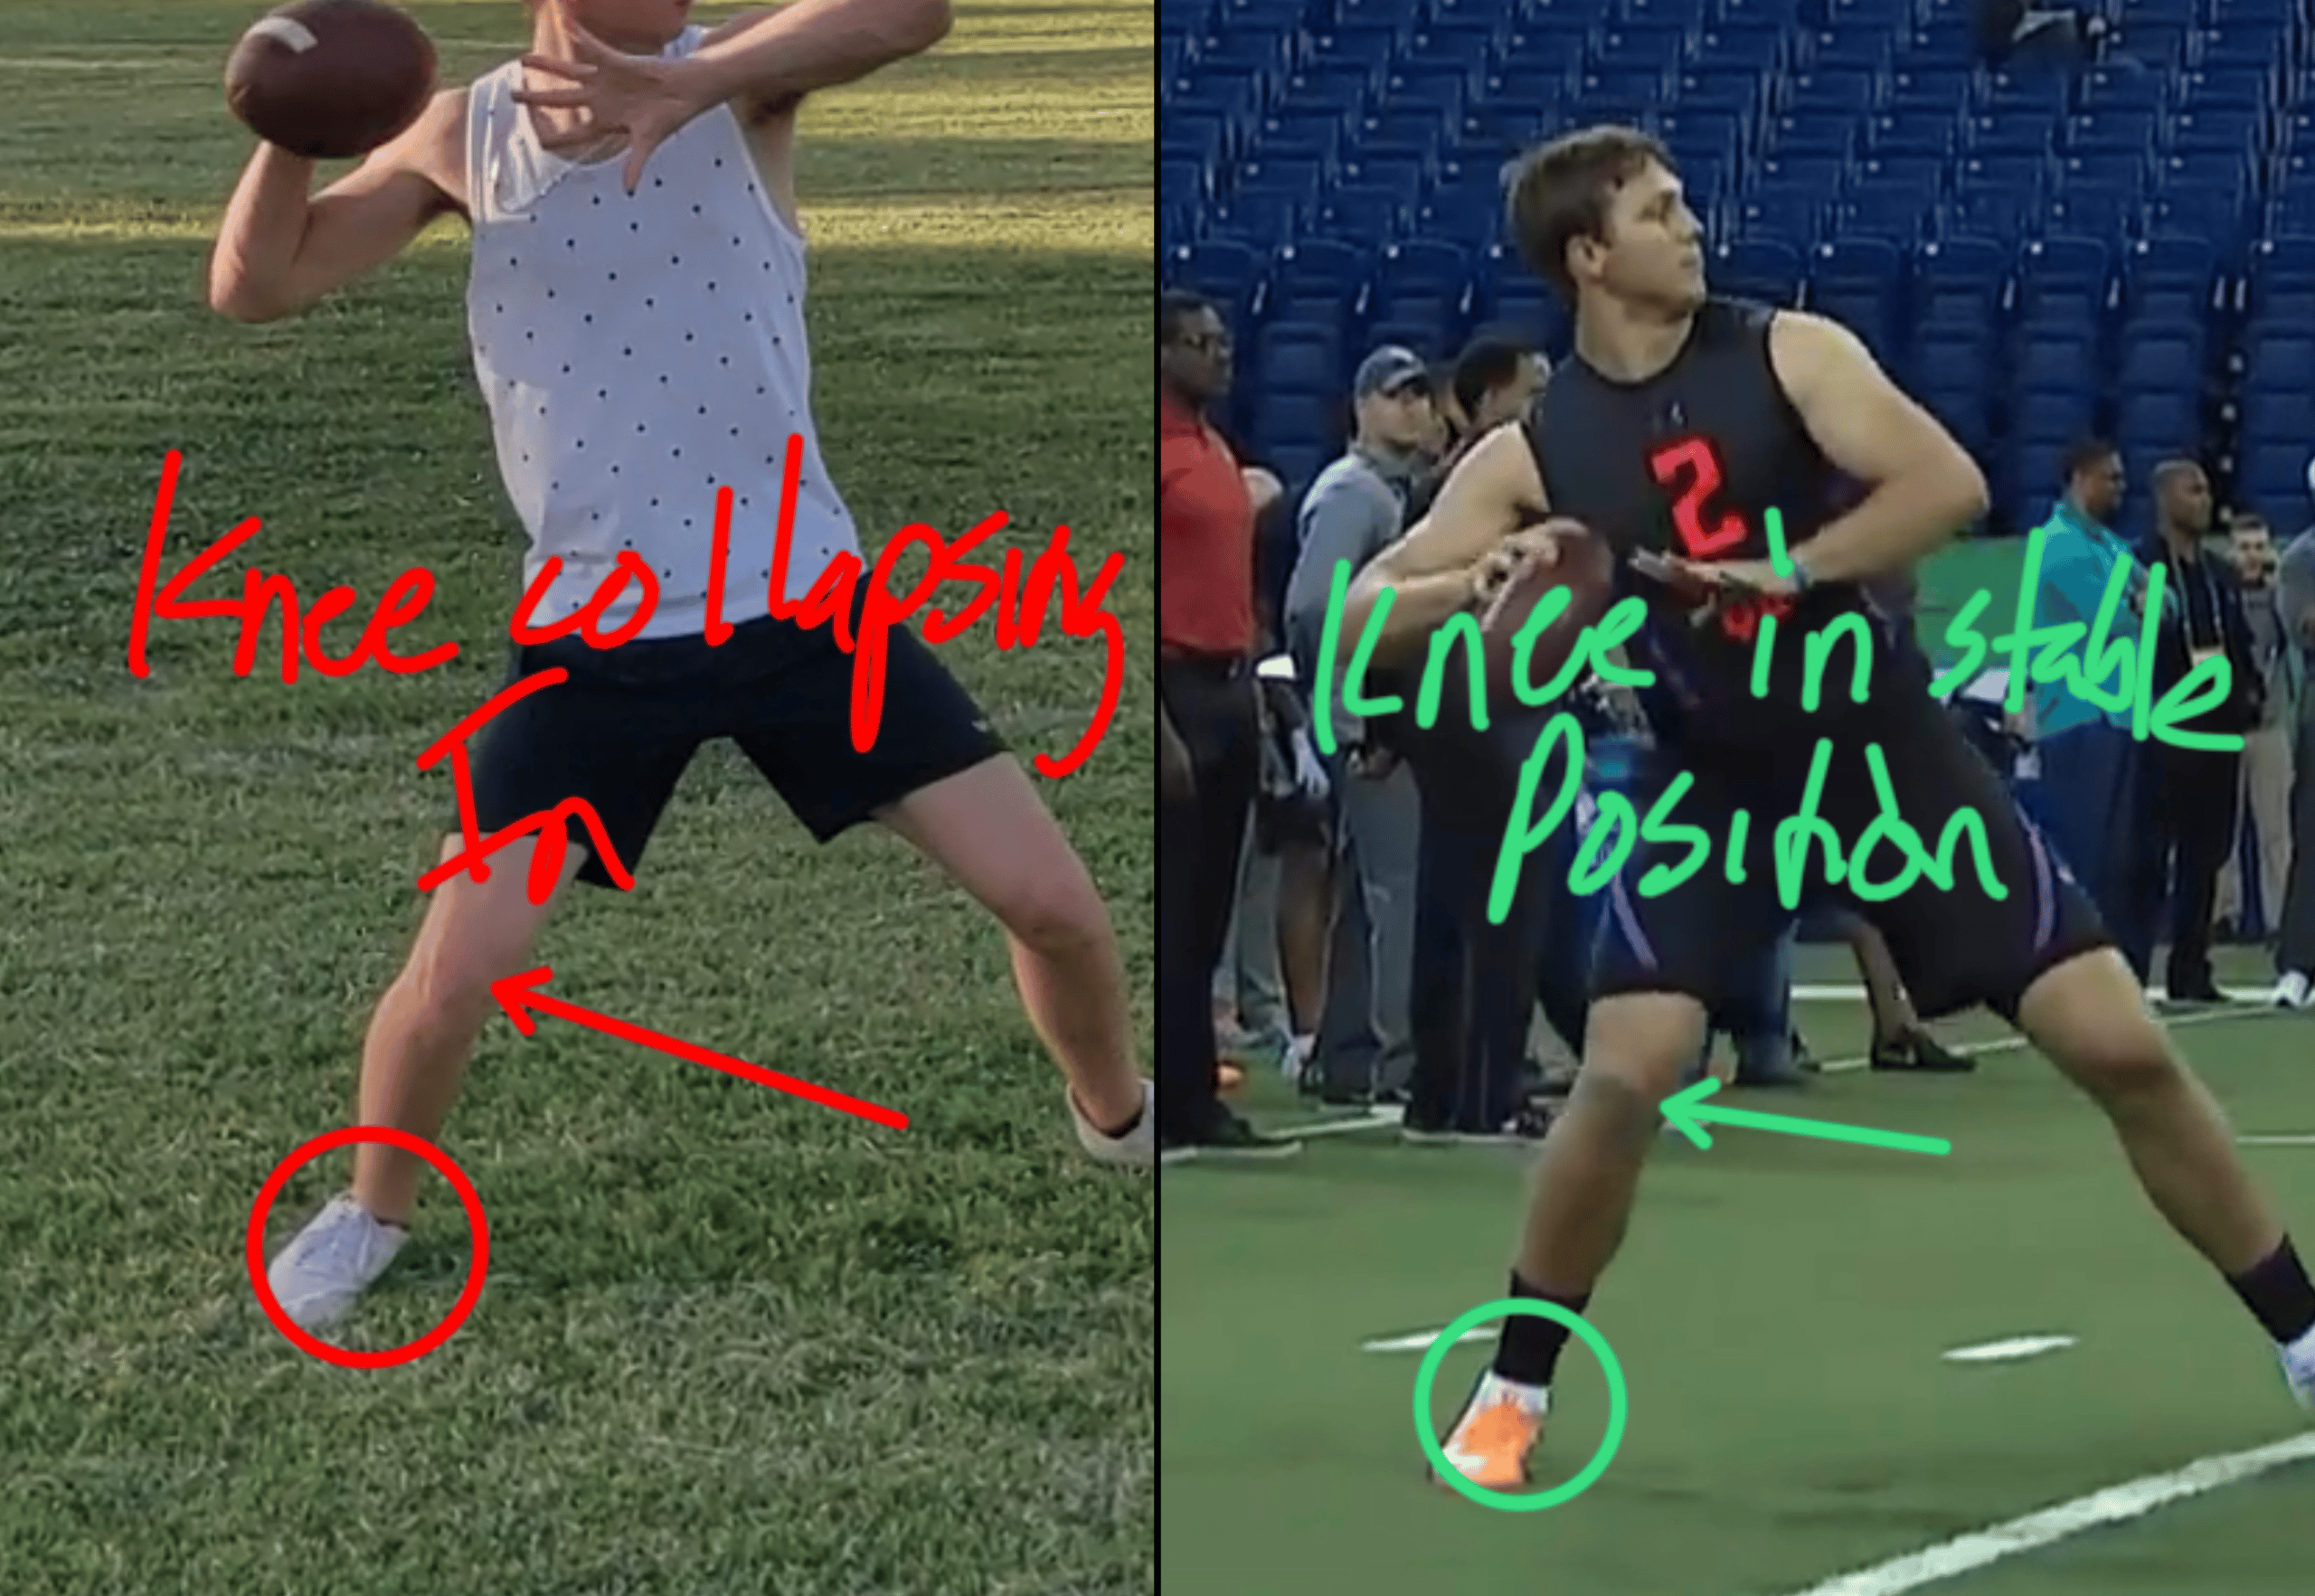 Incorrect vs correct foot position